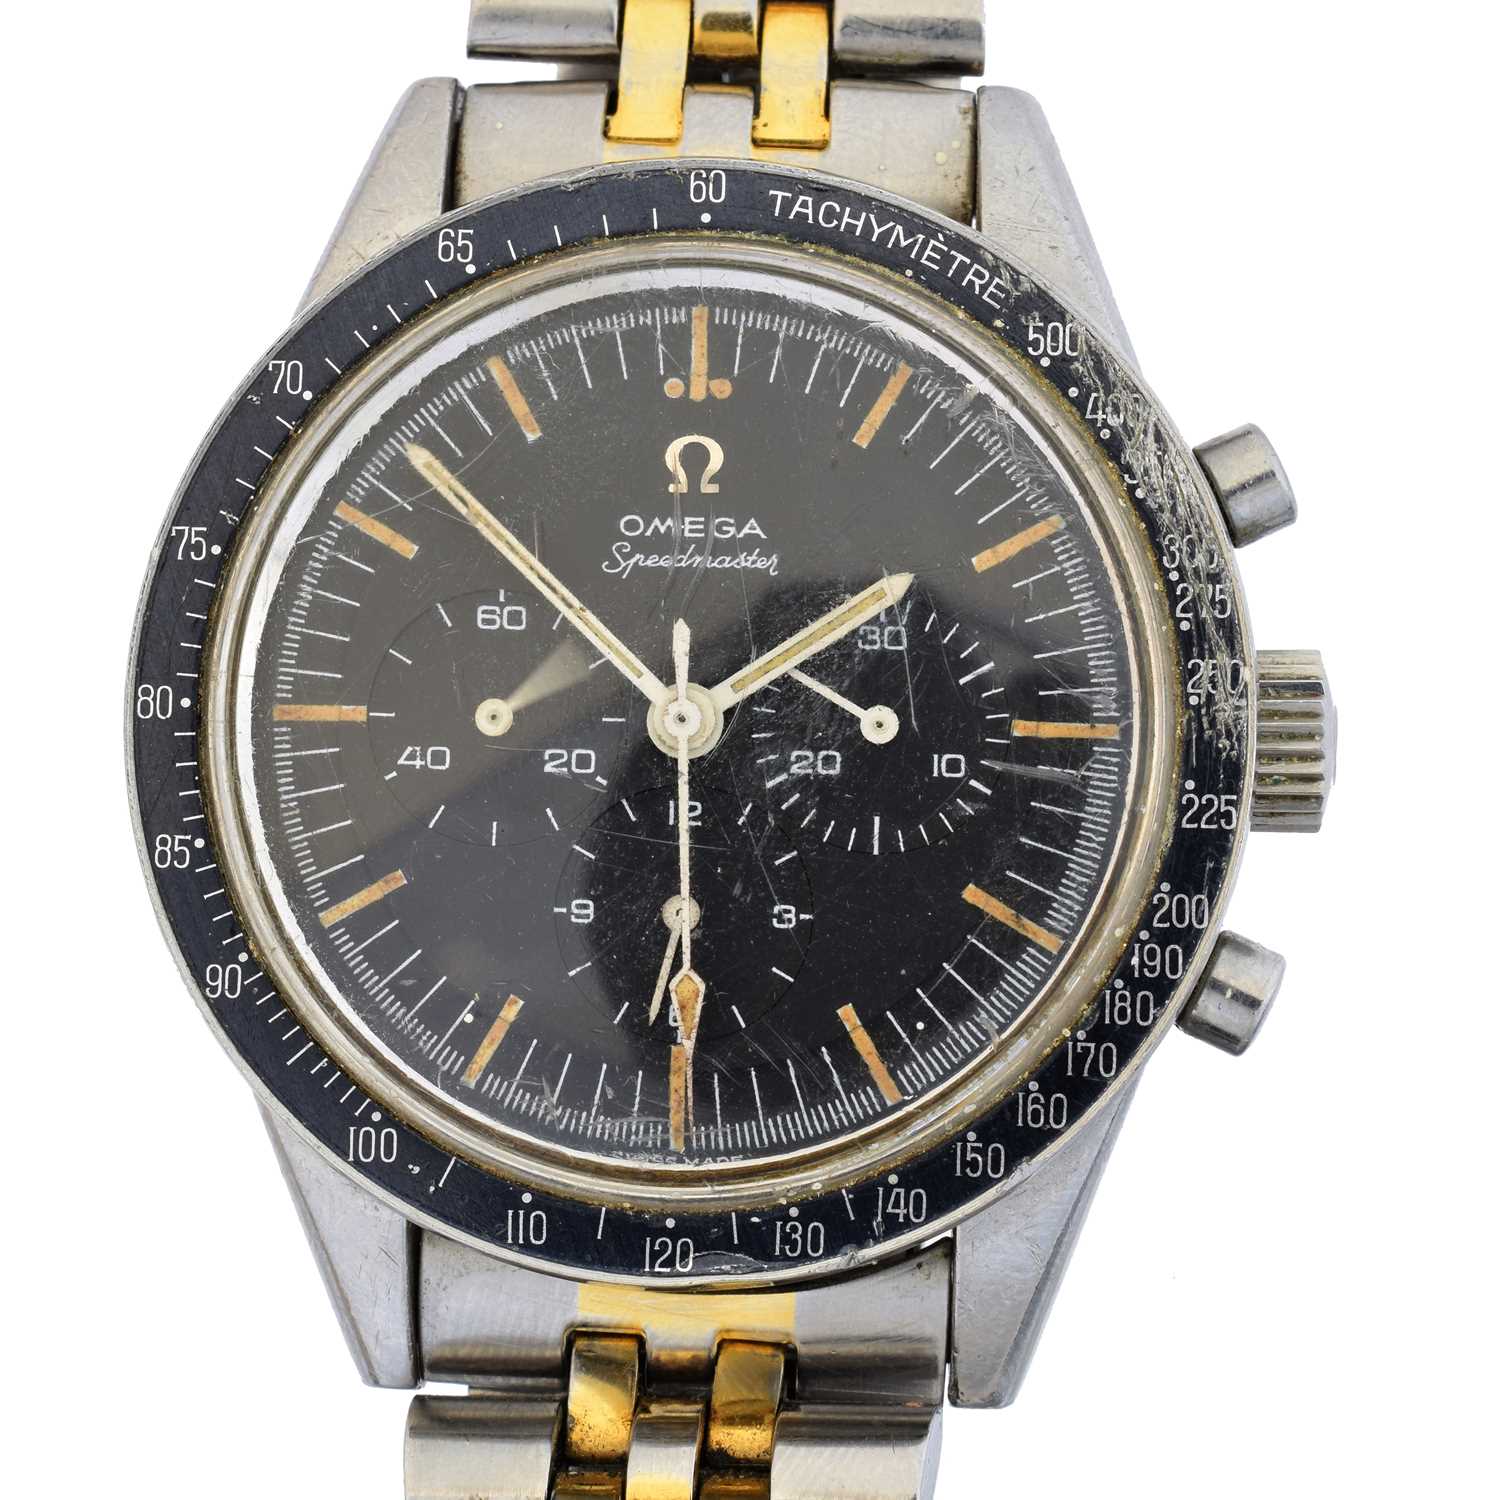 177 - A rare 1960s Omega Speedmaster wristwatch, circa 1962-4,